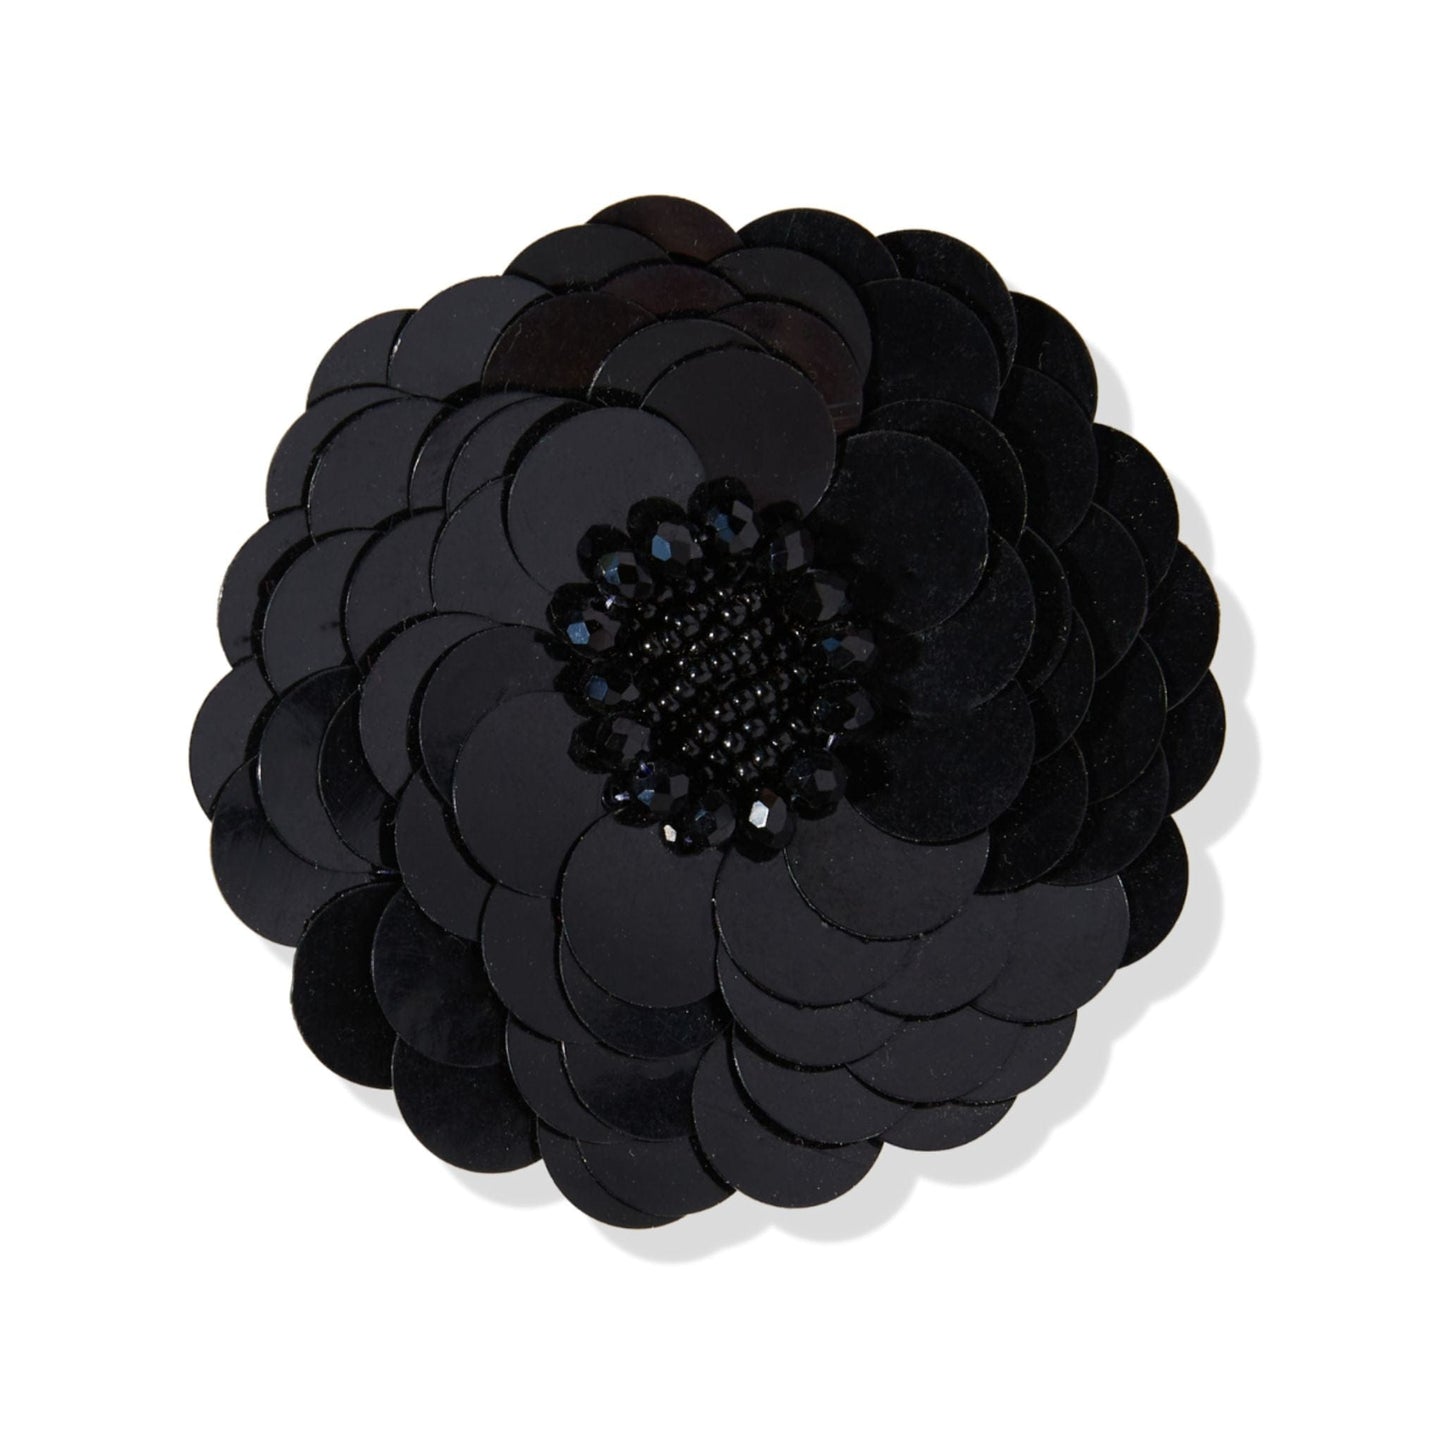 Black Flower Brooch Barrette Combo hair accessory